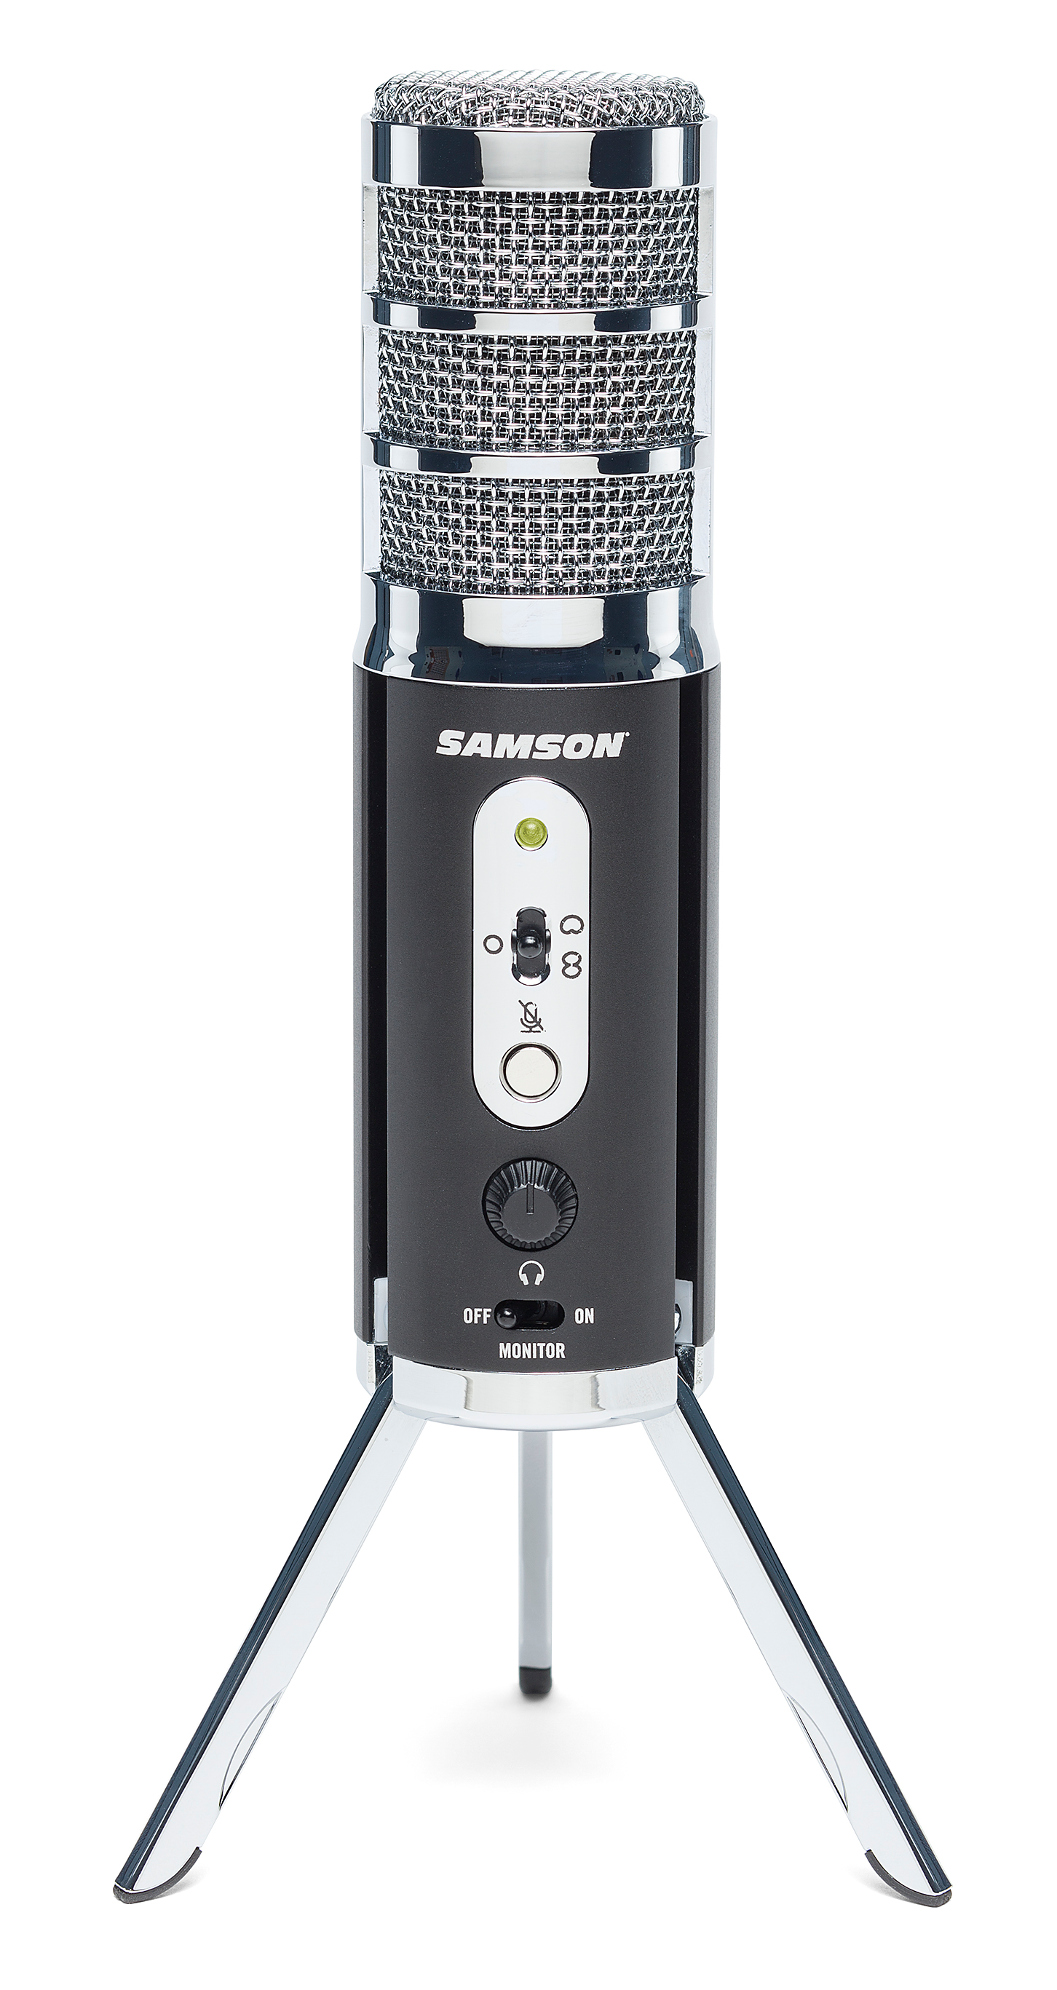 Samson - USB Electret Condenser Microphone - Black